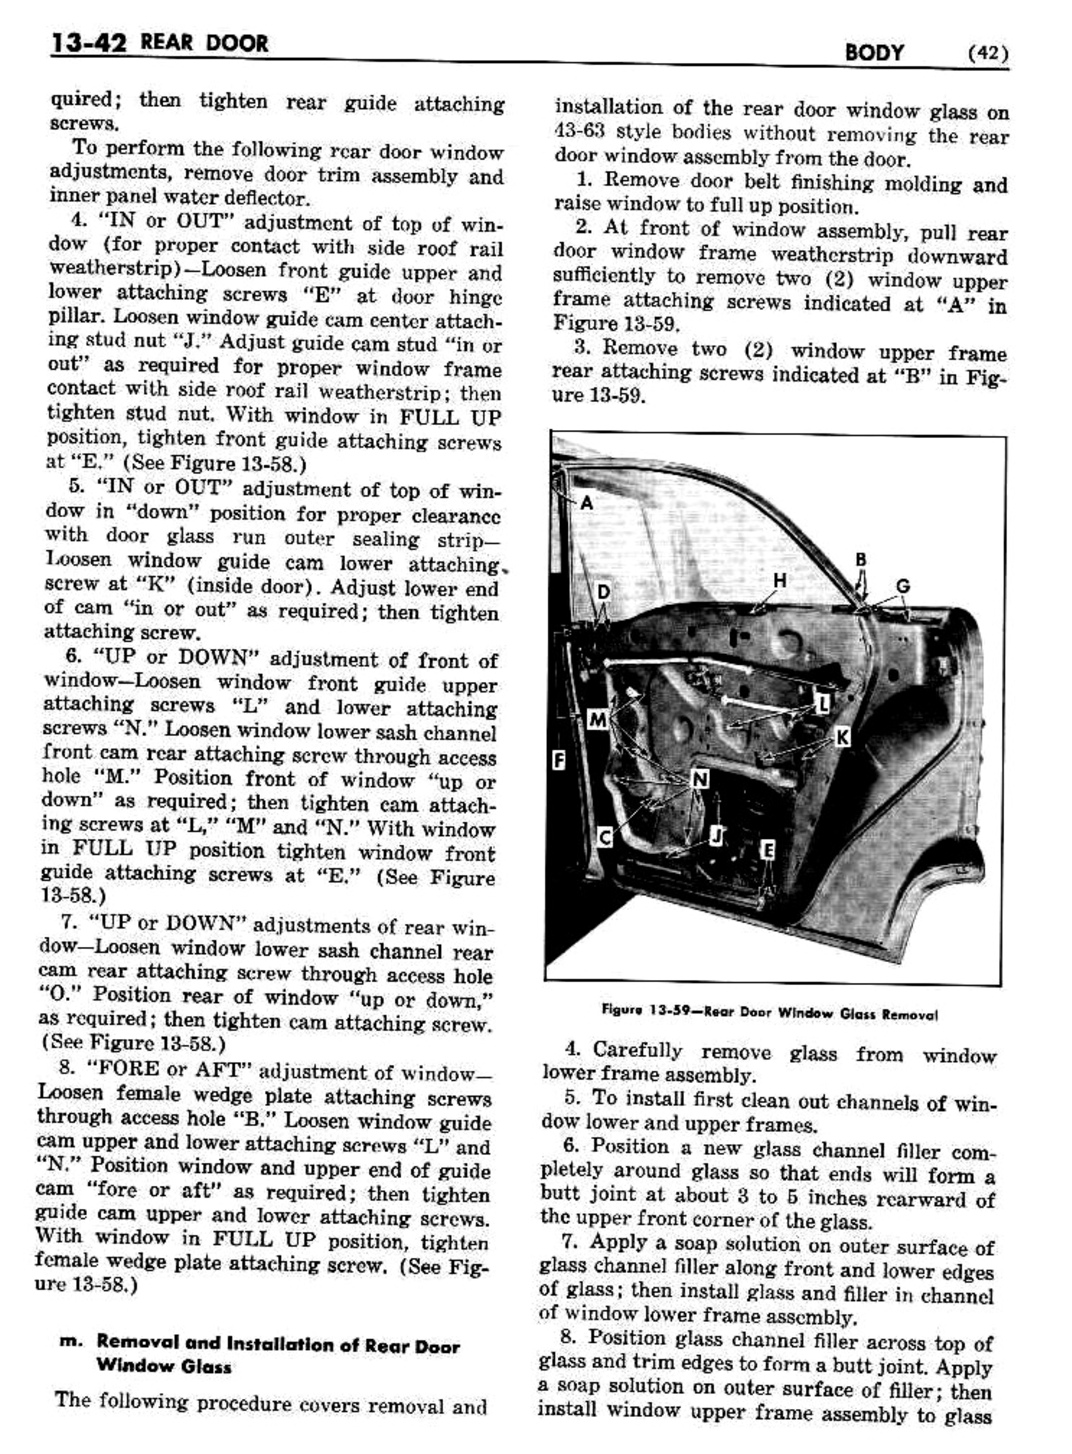 n_1958 Buick Body Service Manual-043-043.jpg